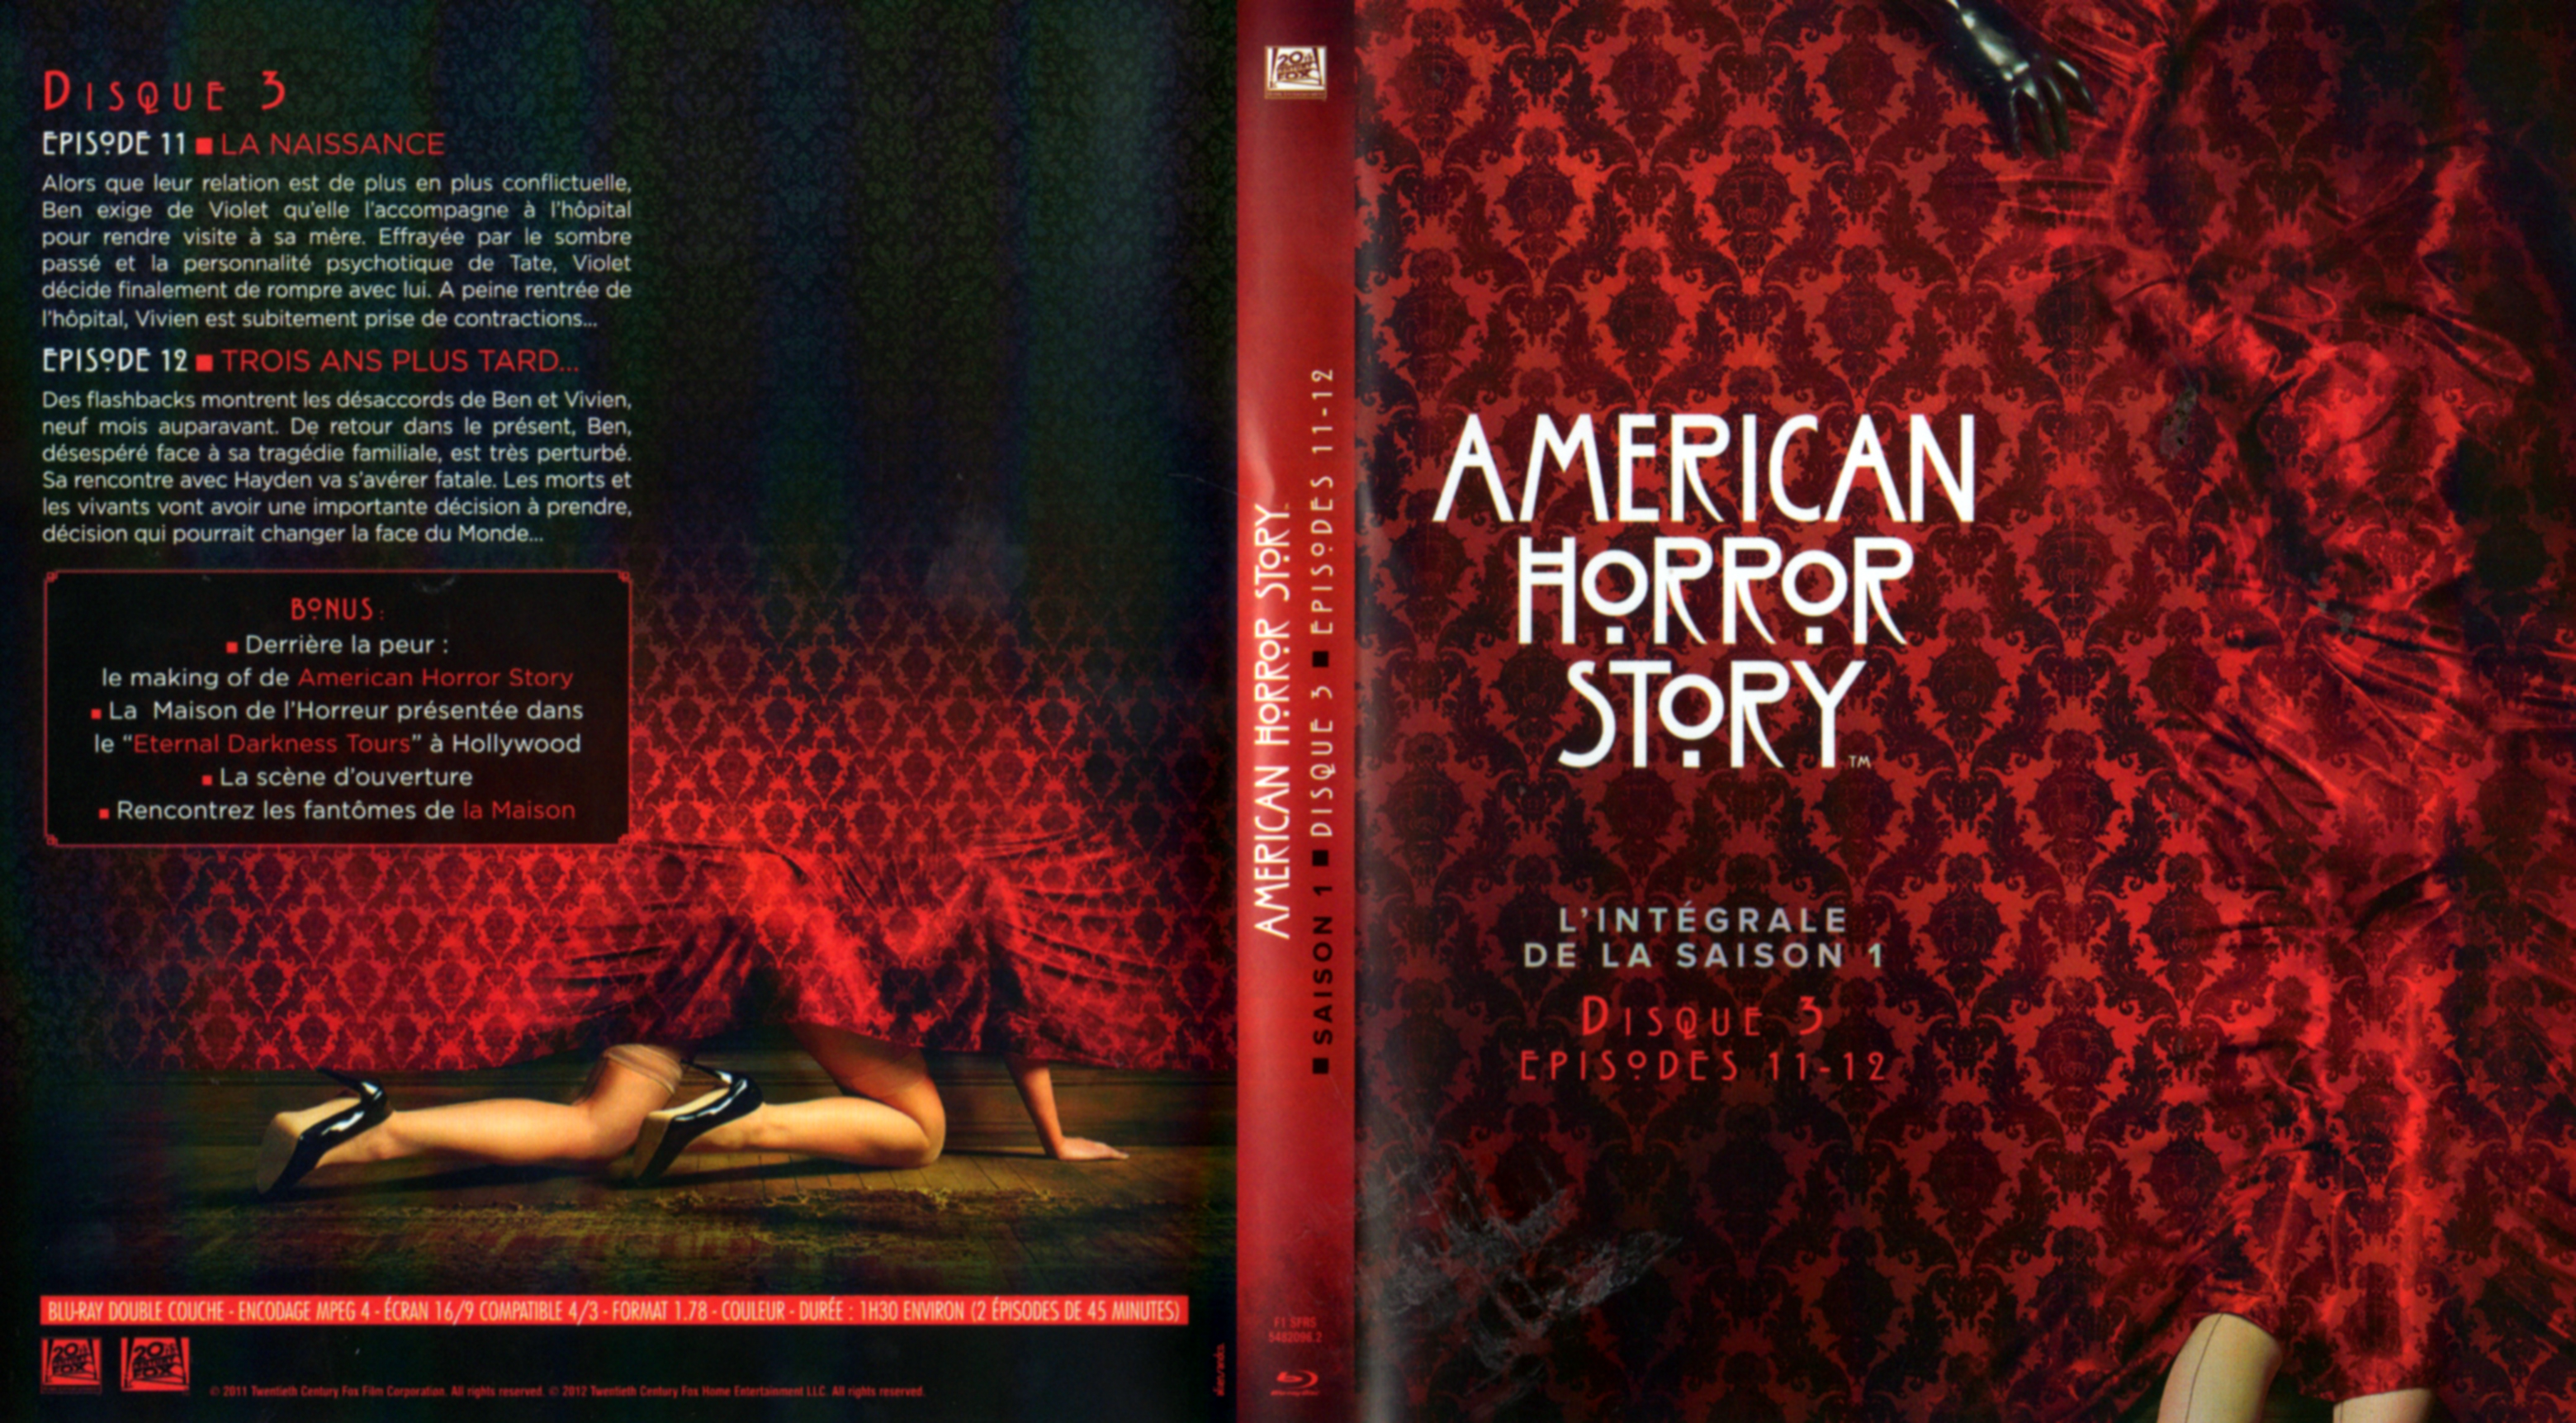 Jaquette DVD American horror story Saison 1 DVD 2 (BLU-RAY)